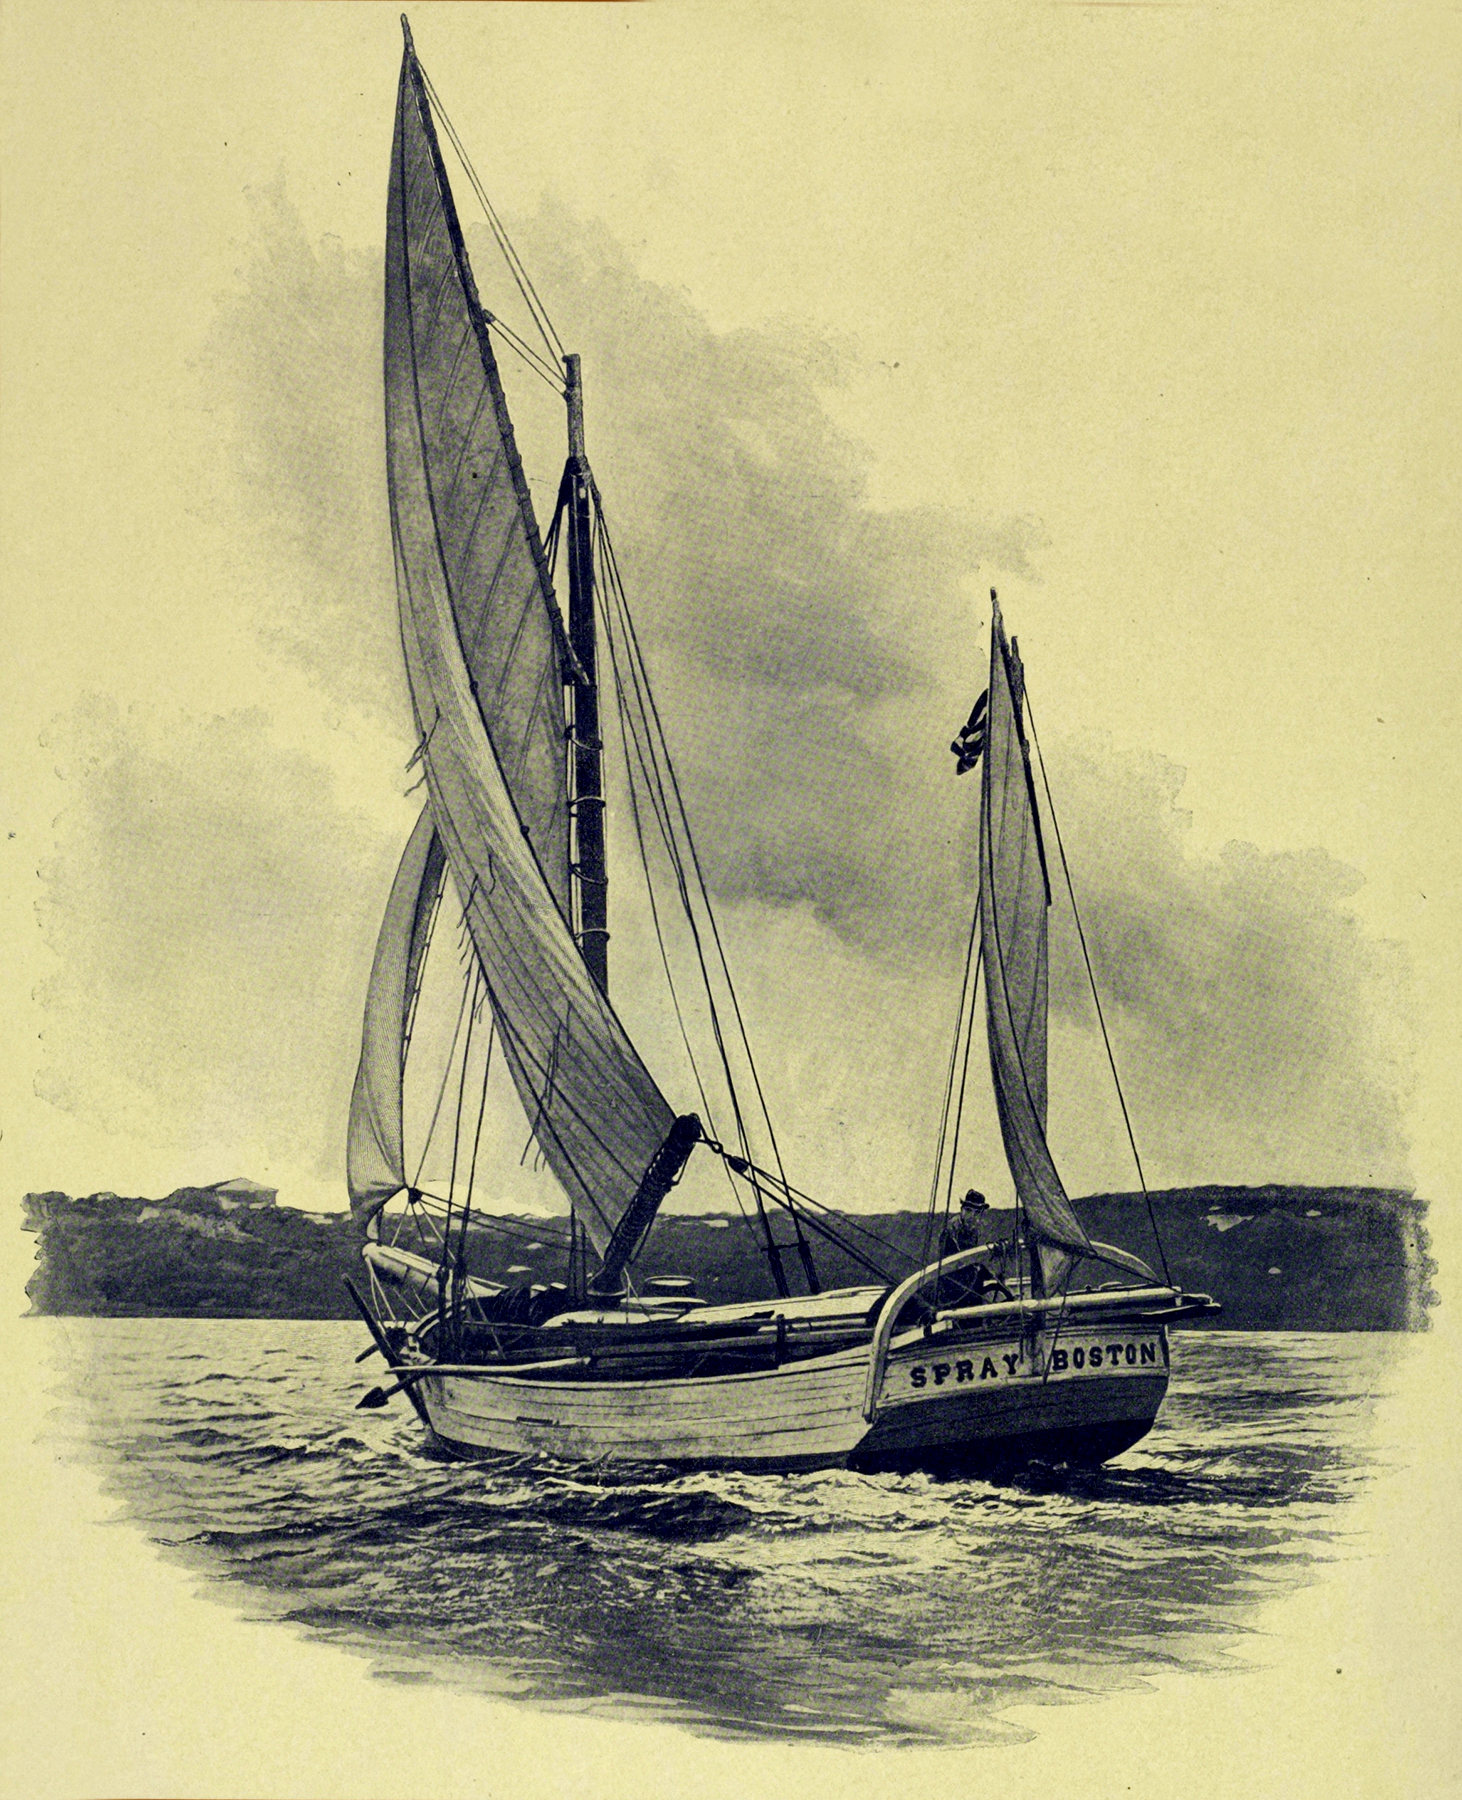 Vintage sailboat photo